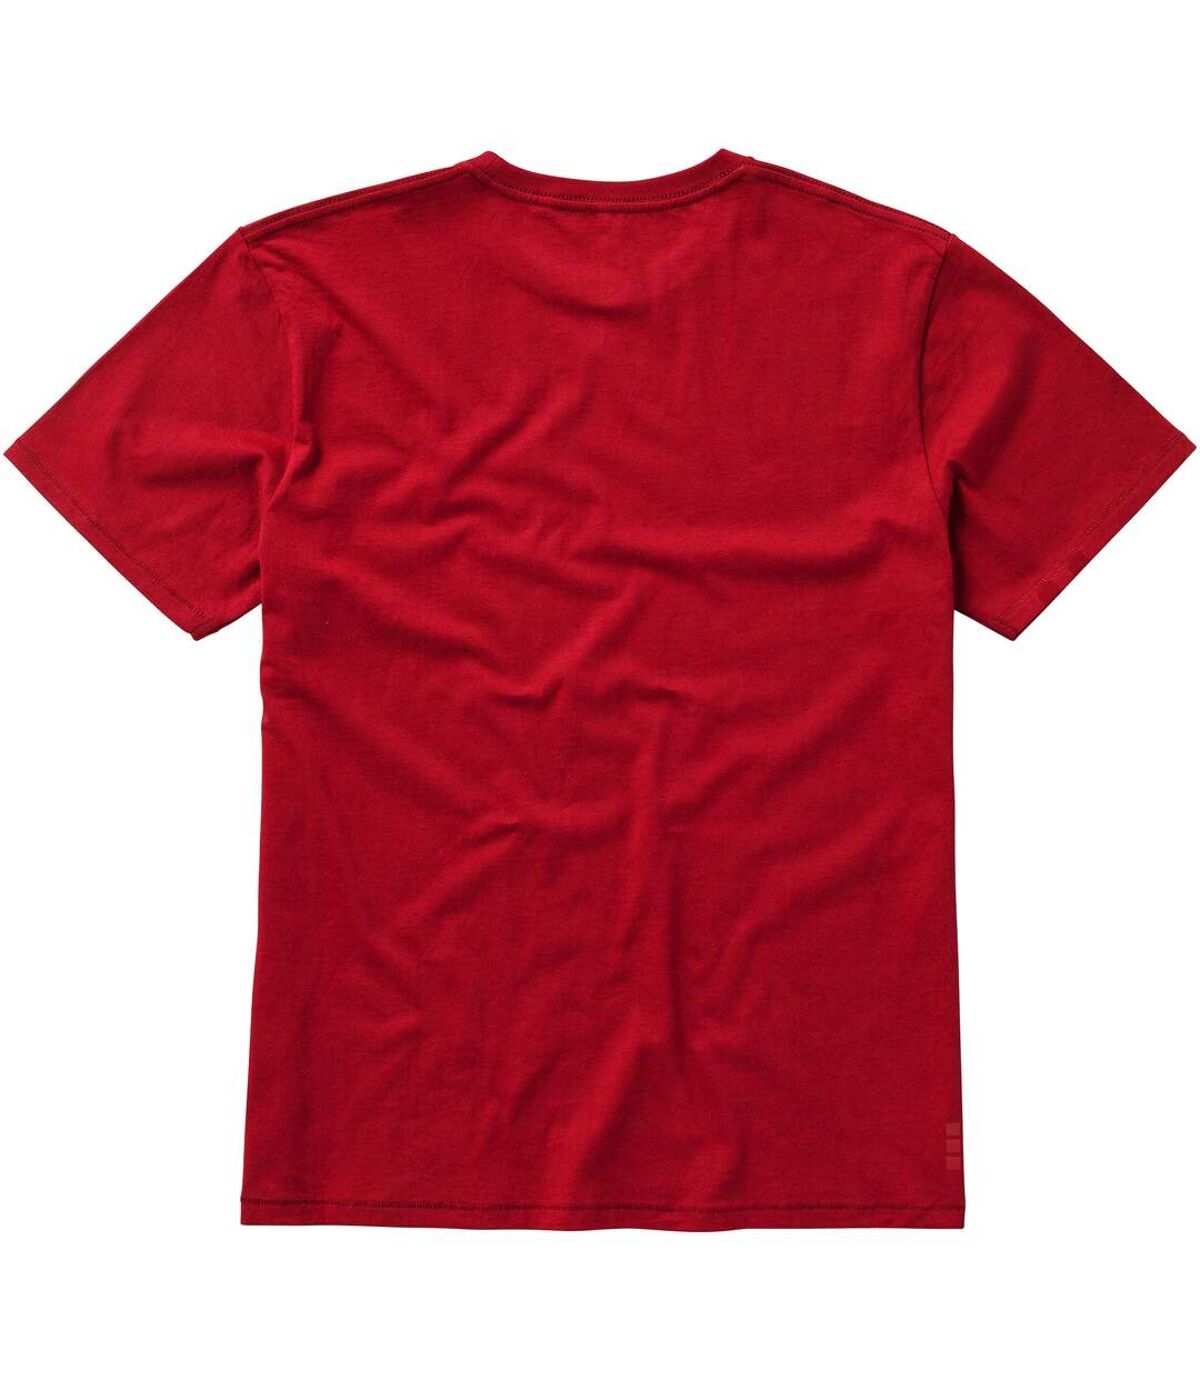 Elevate Mens Nanaimo Short Sleeve T-Shirt (Red) - UTPF1807